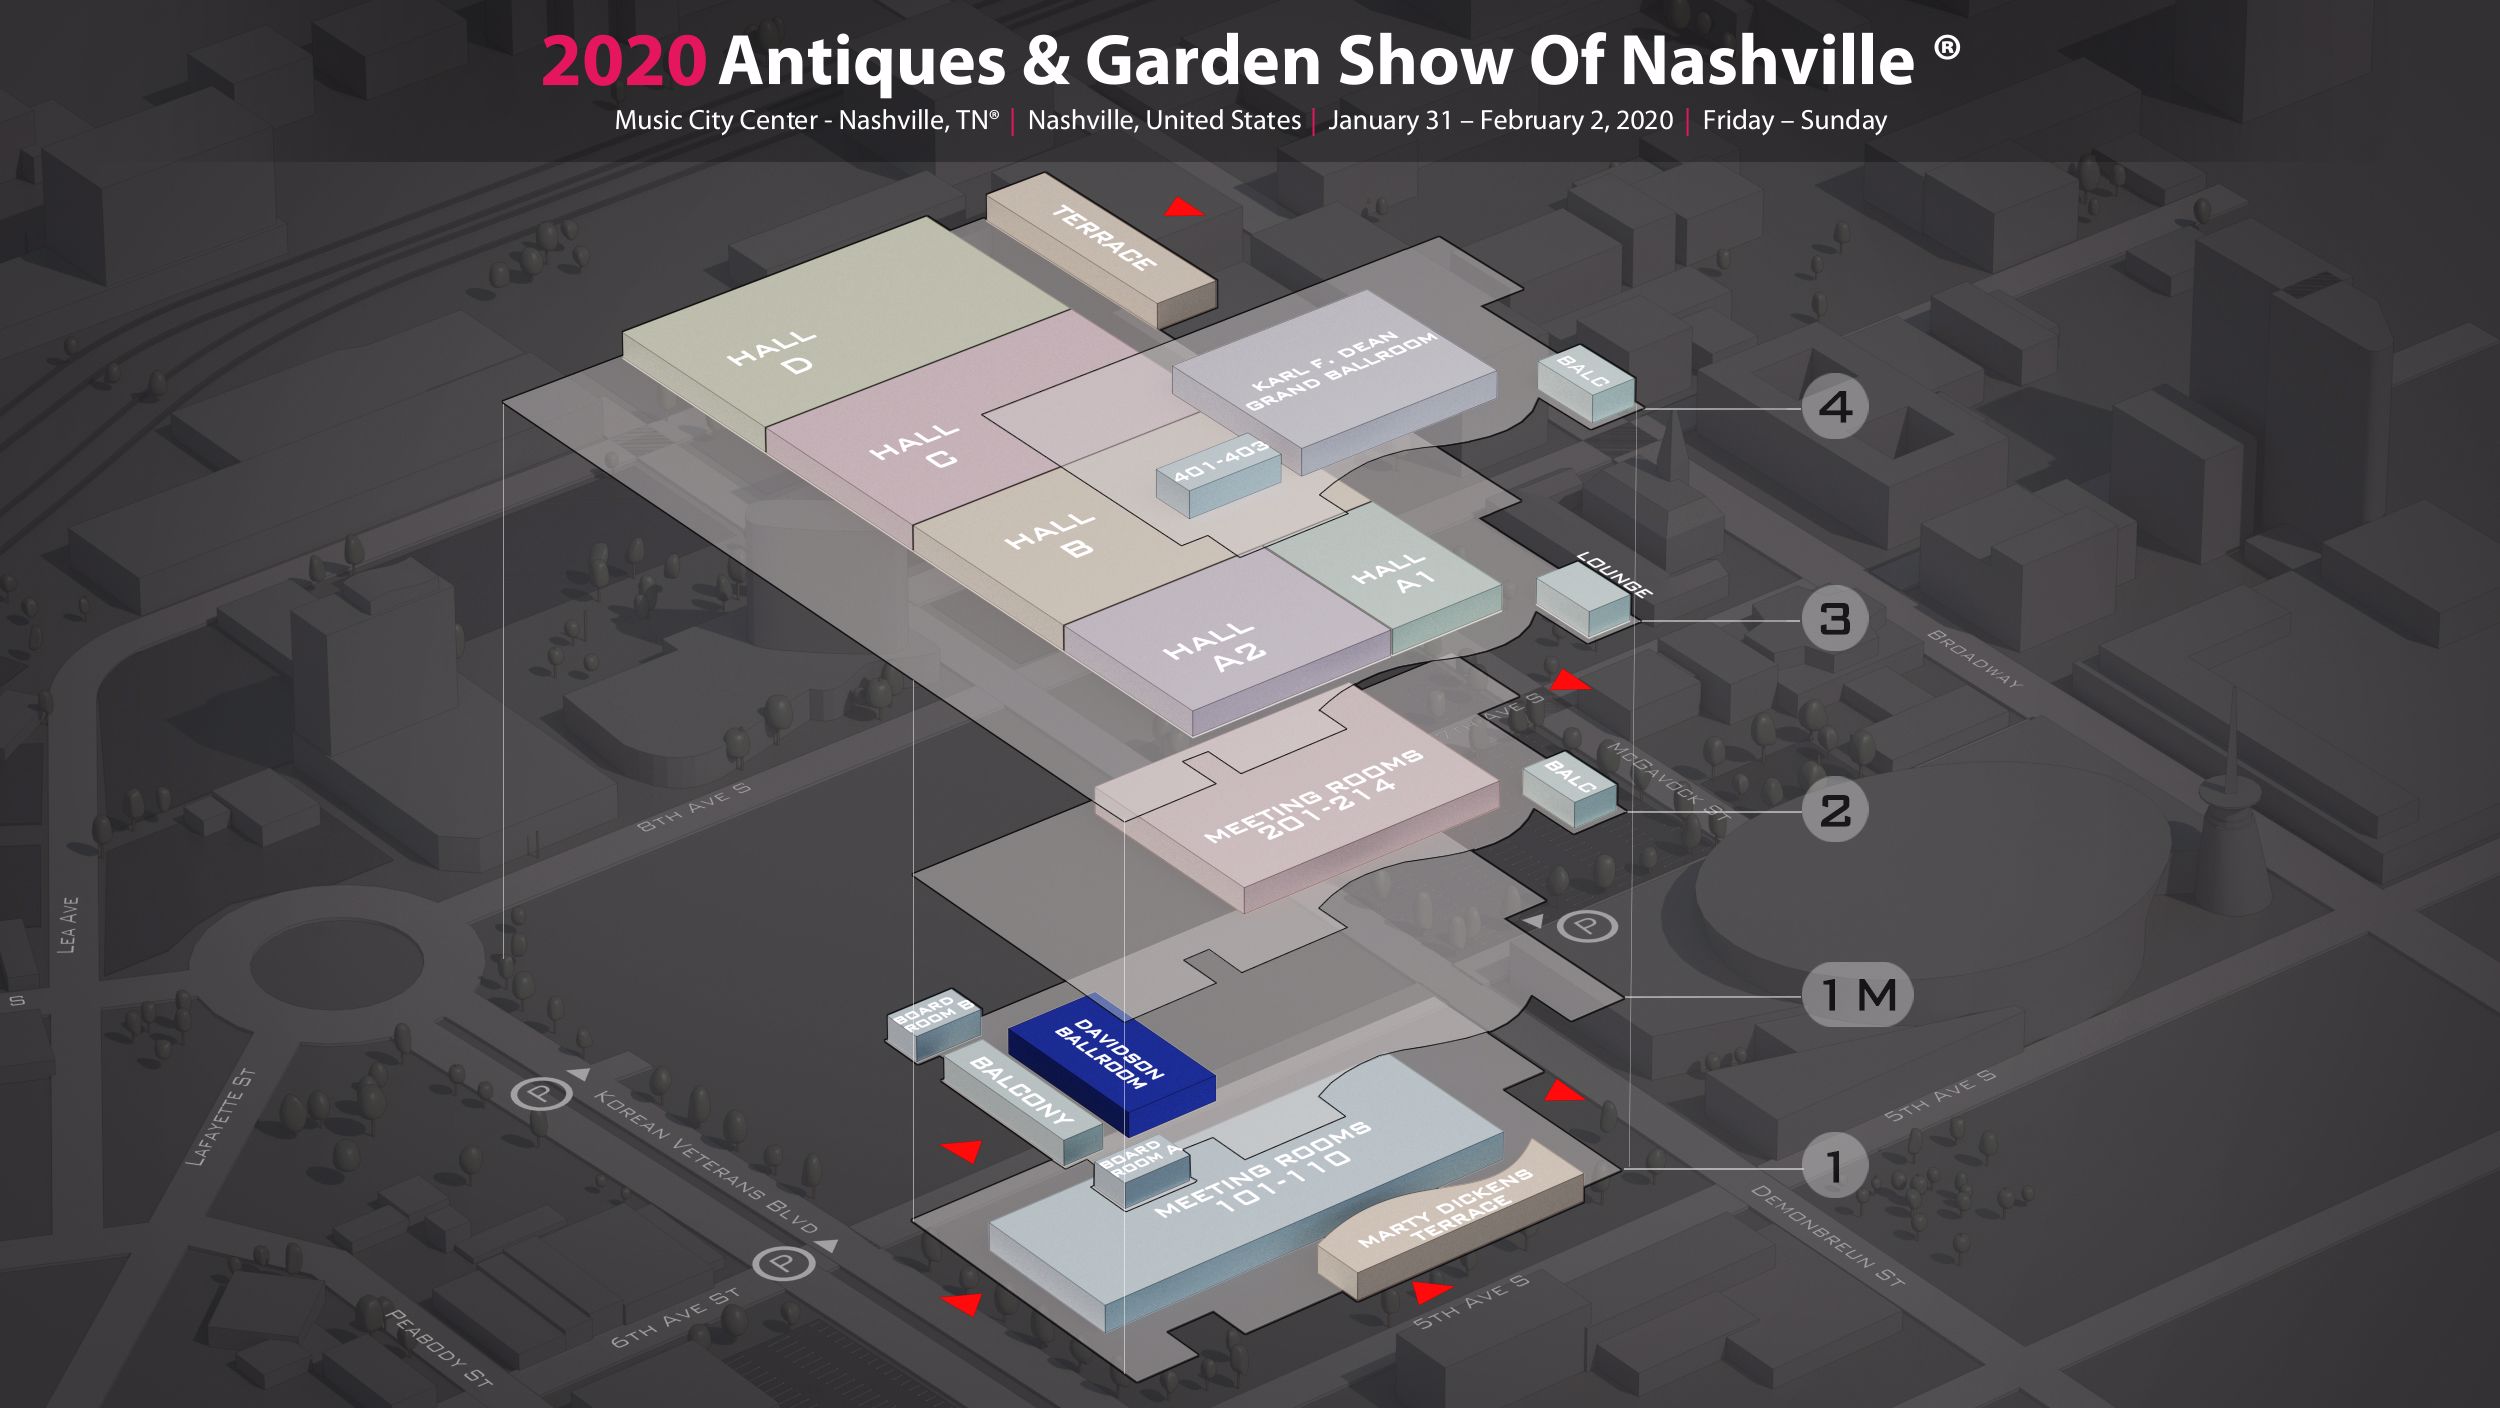 Antiques Garden Show Of Nashville 2020 In Music City Center